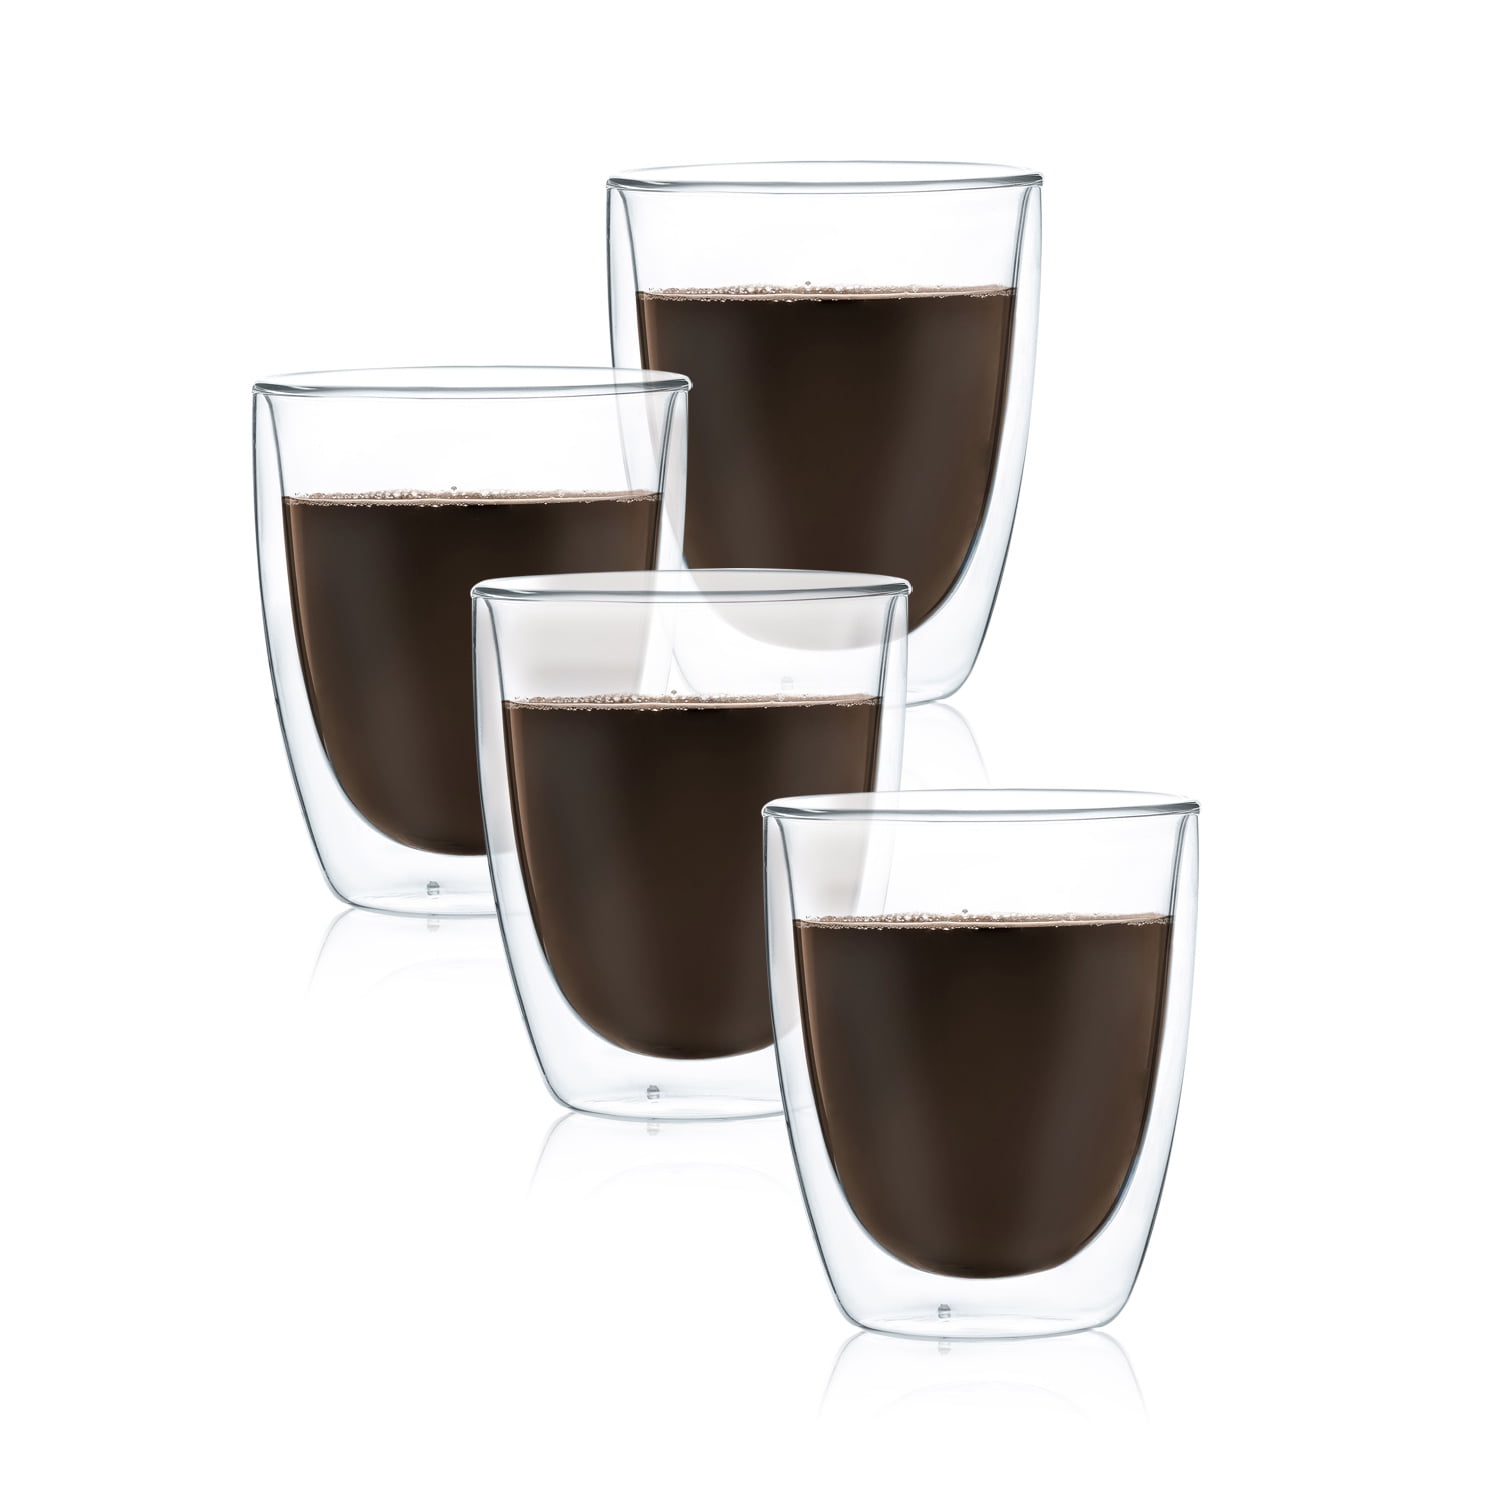 Double Wall Glass Mug, Set of 4, Tea Cups and Insulated Coffee Mugs for Latte, Espresso, Cappuccino, 8.5 oz - Walmart.com